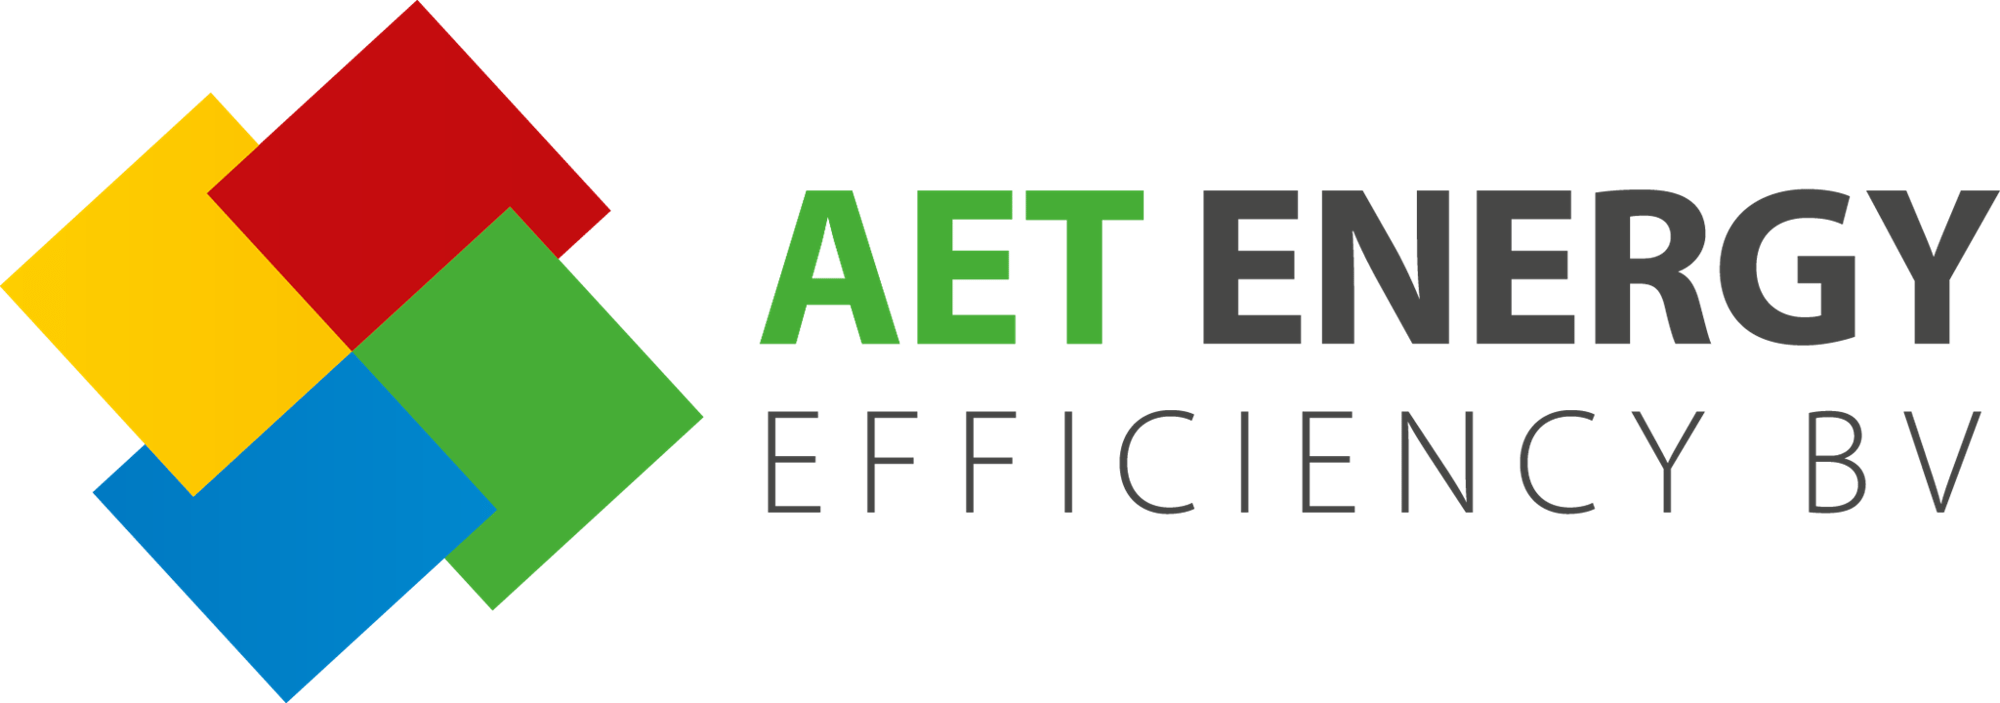 Incontorl-klant-AET-Energy-logo